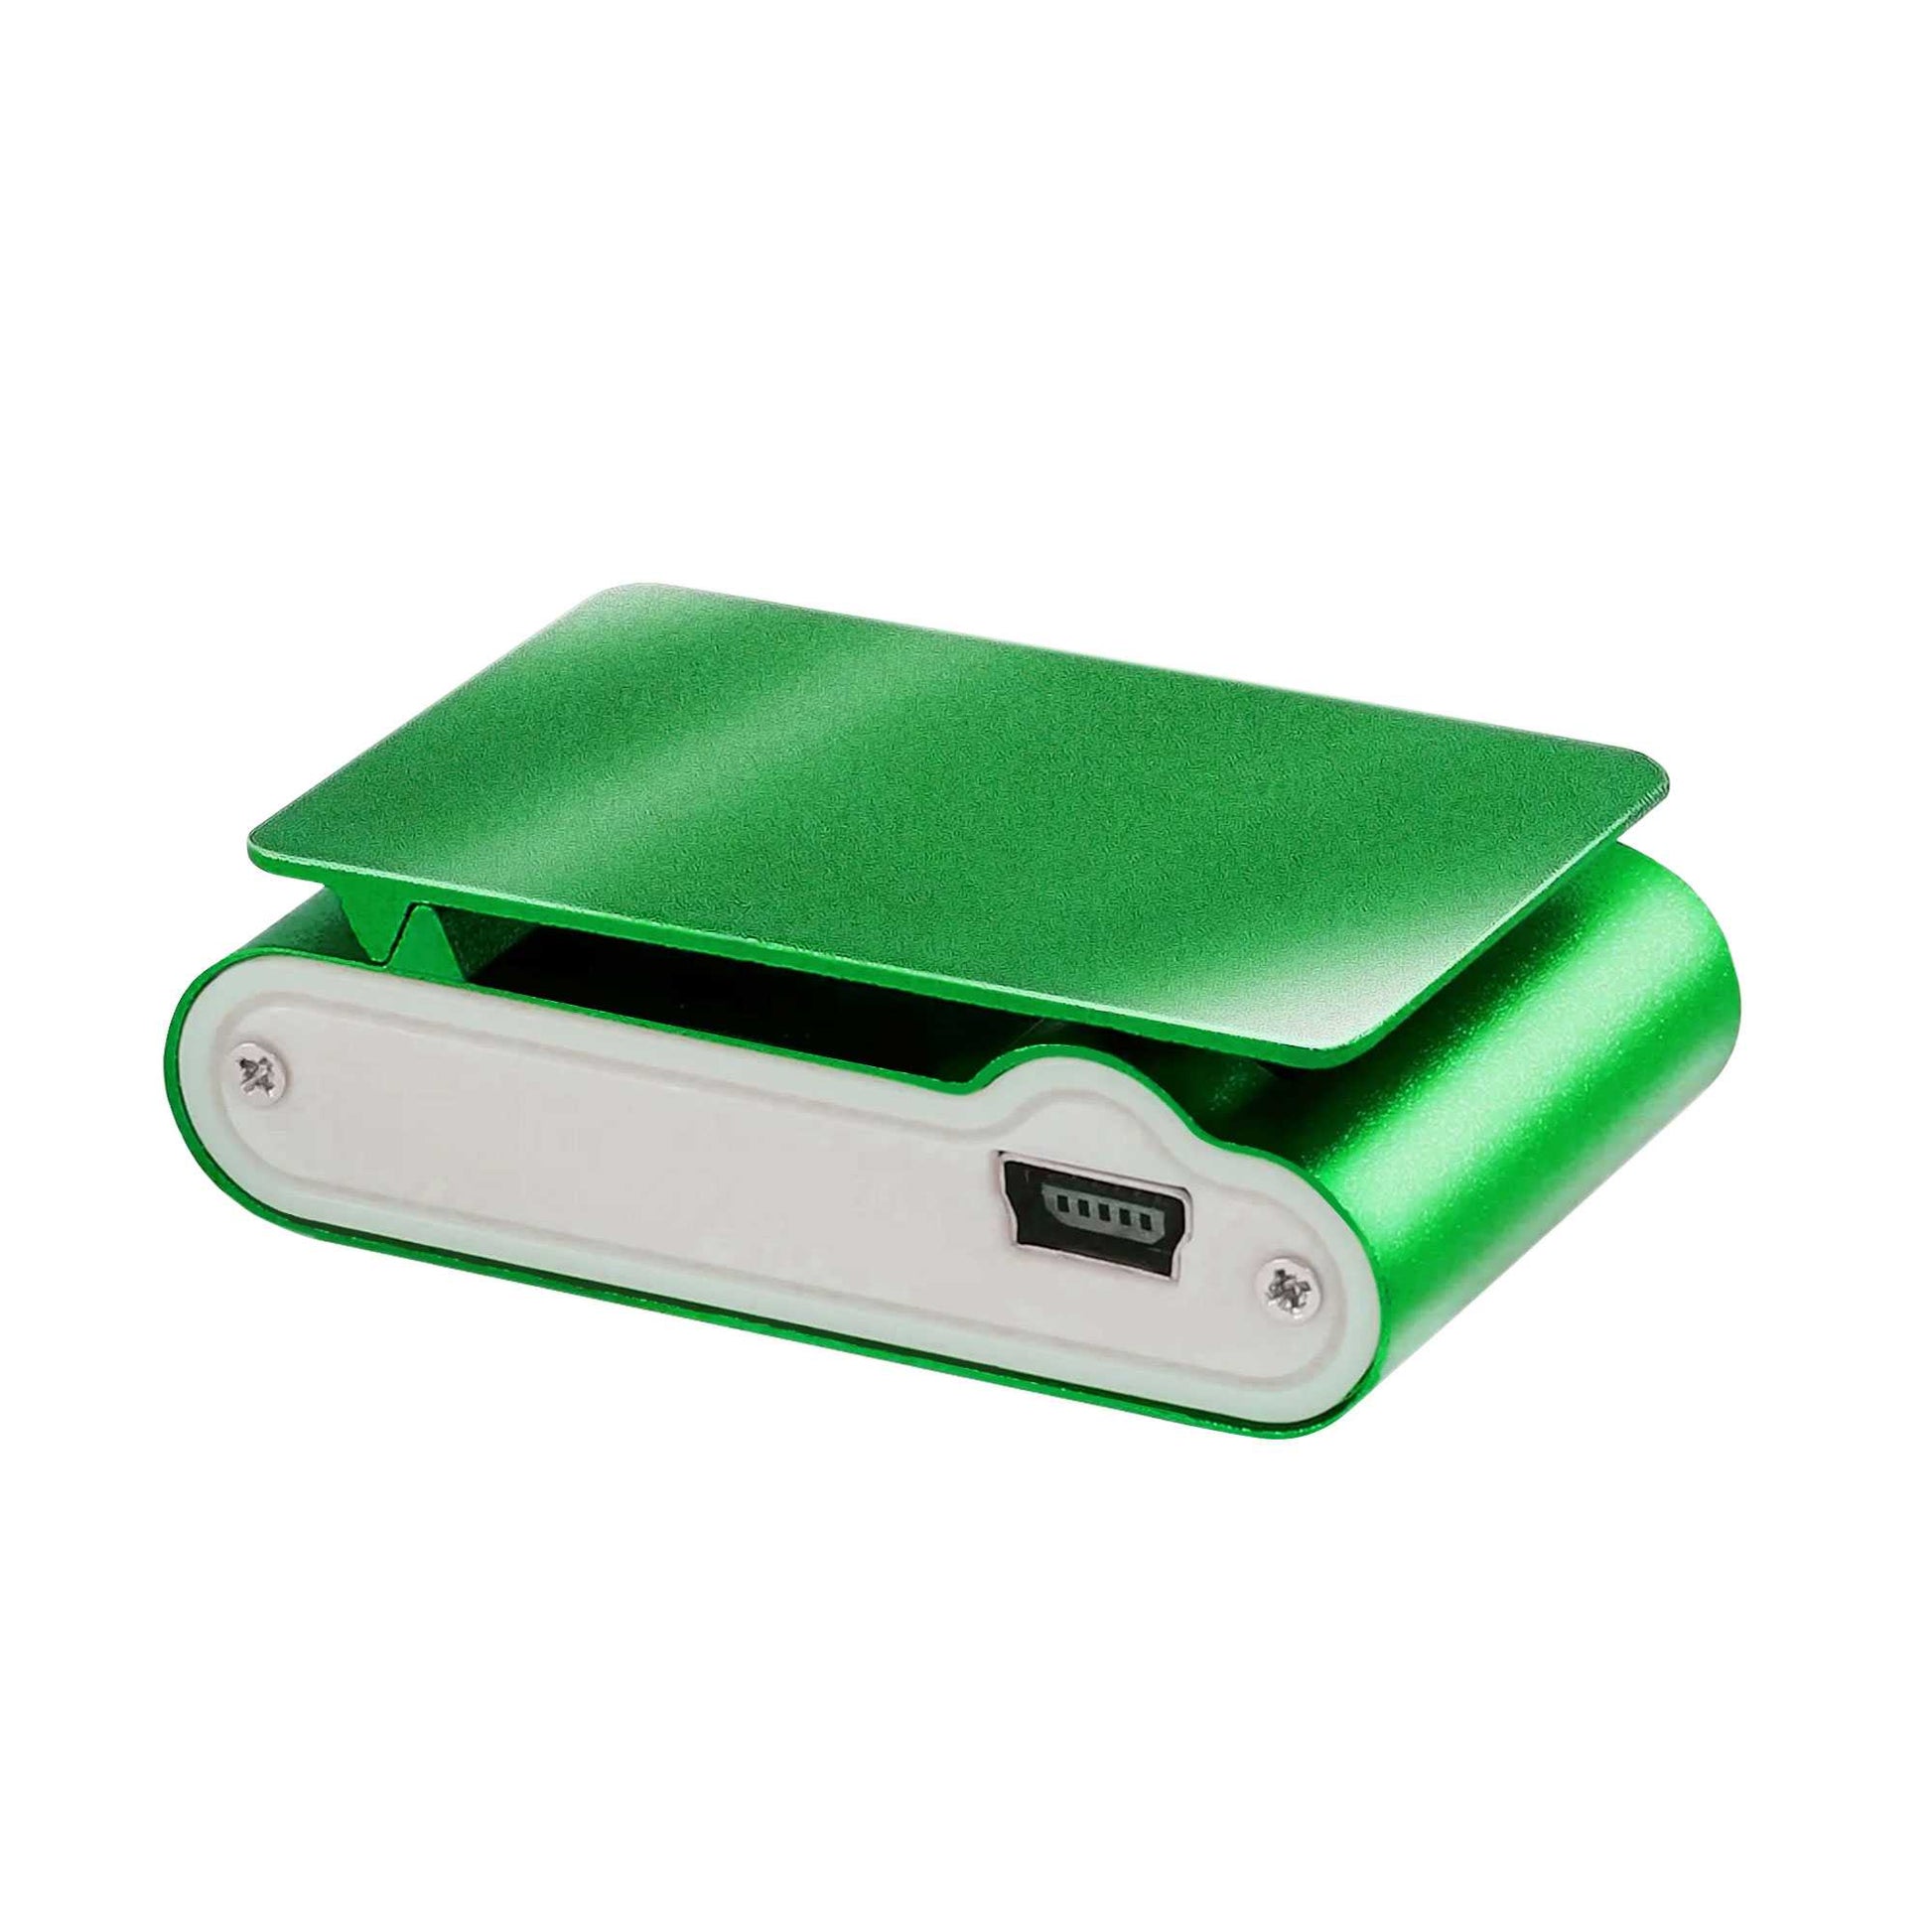 Lector Reproductor MP3 Player Verde Aluminio Puerto Mini USB Ranura para Tarjeta Micro SD con Clip Pantalla